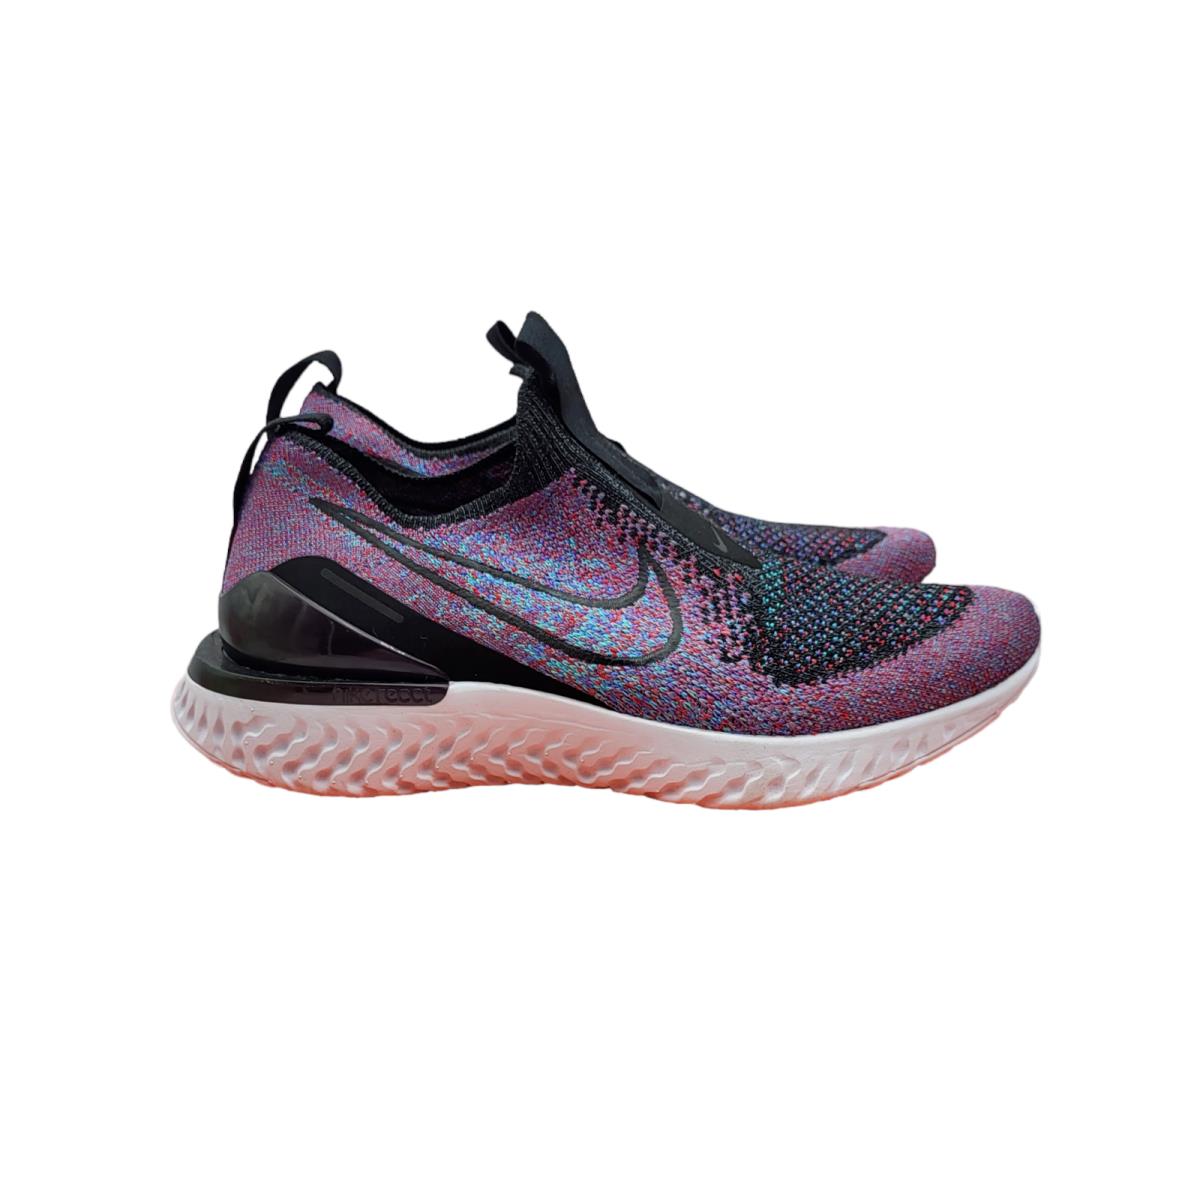 Nike Epic Phantom React Flyknit Running Shoes Womens Sz 5 Black BV0415-002